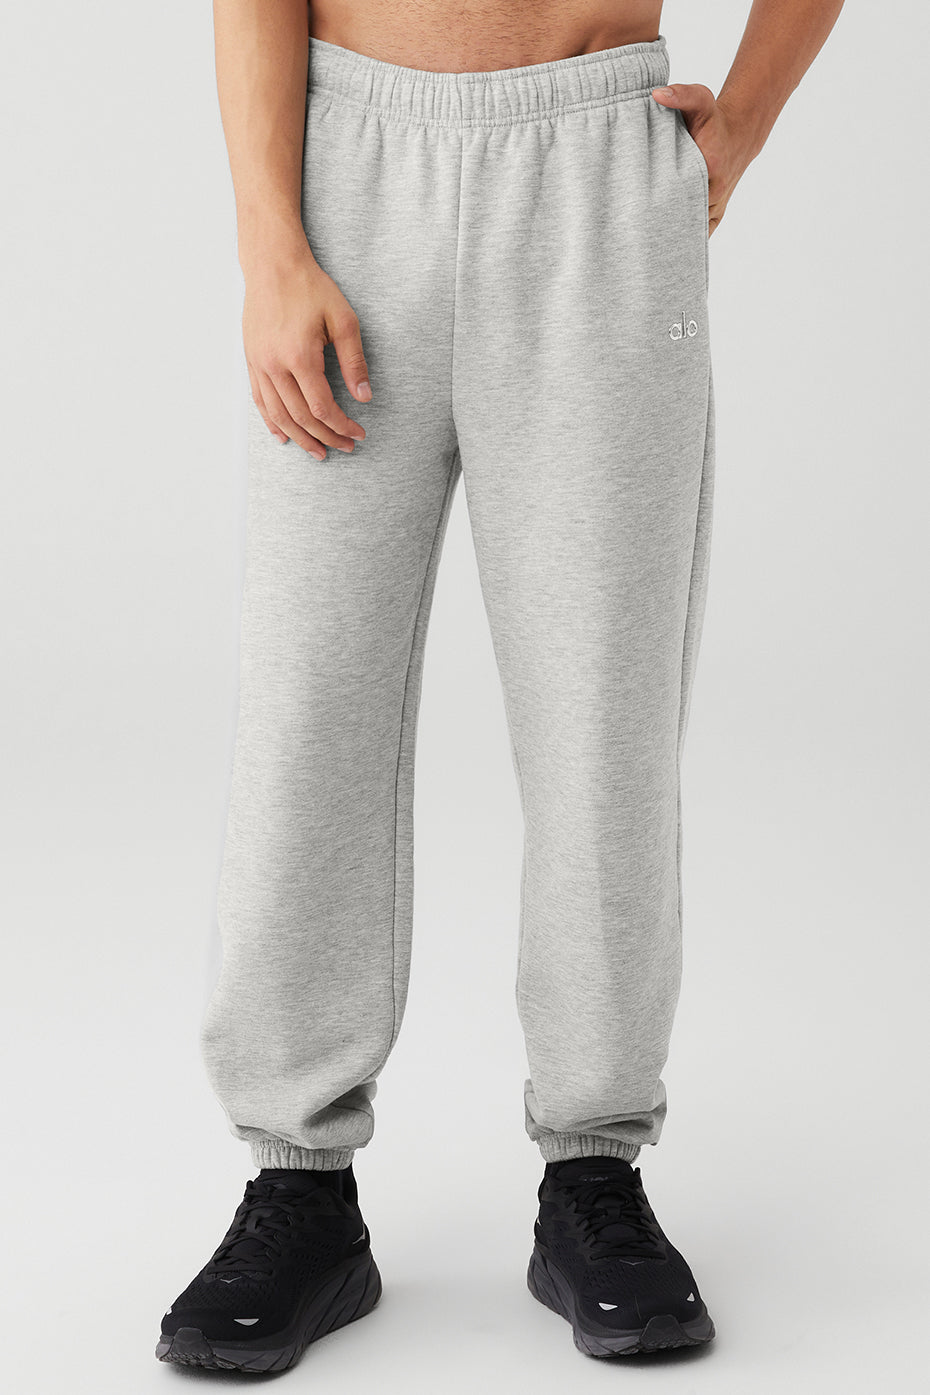 Alo Accolade Sweatpants - ShopStyle Activewear Pants